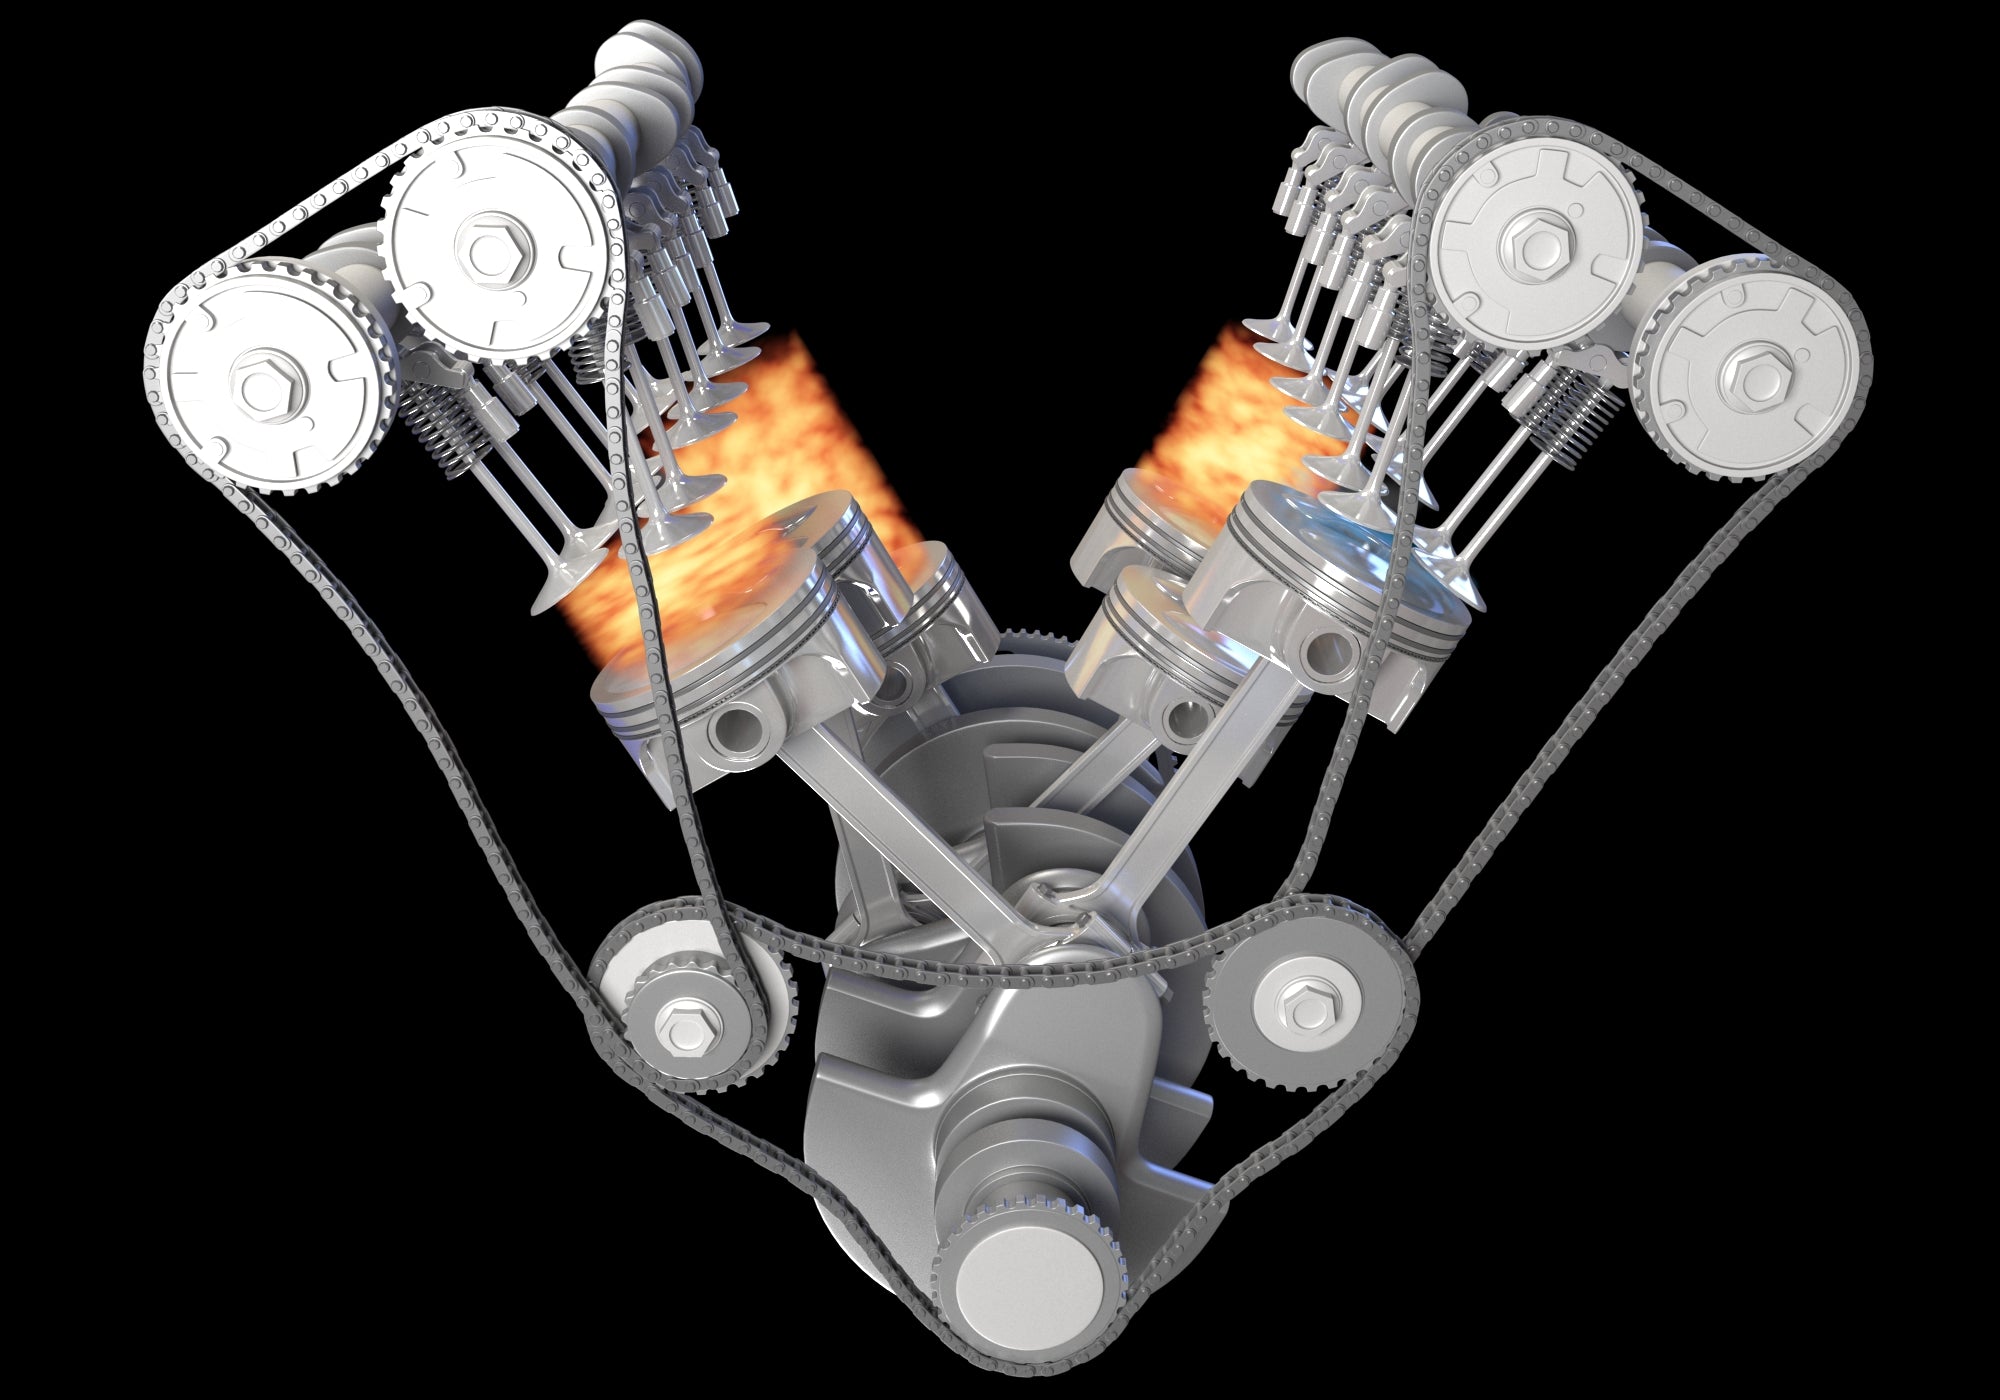 Animated V6 Engine with Gasoline Ignition